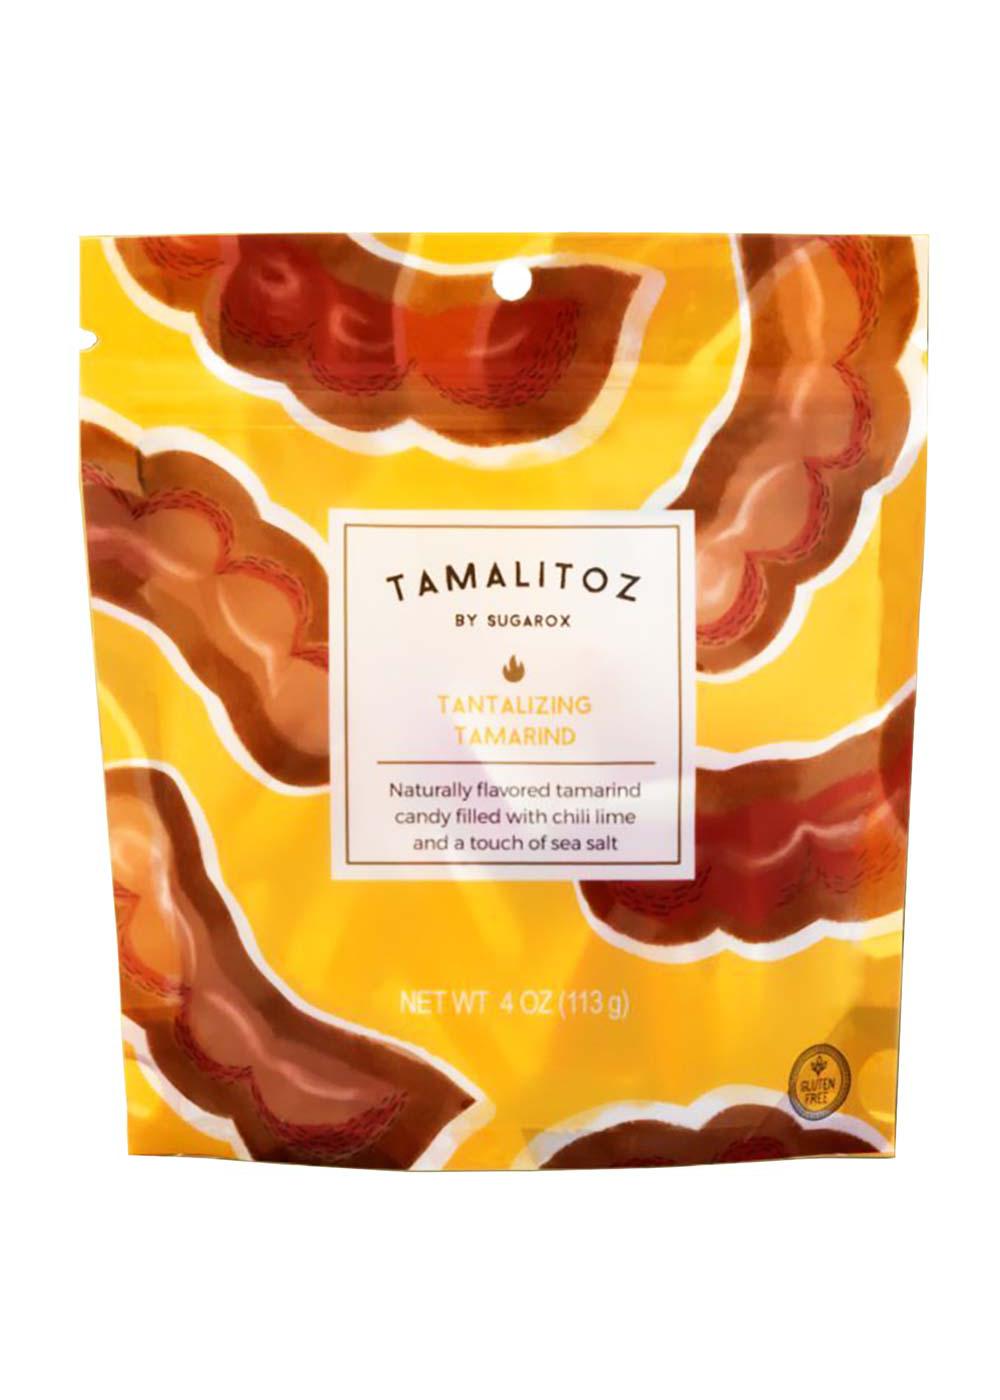 Tamalitoz by Sugarox Tantalizing Tamarind Candy; image 1 of 2